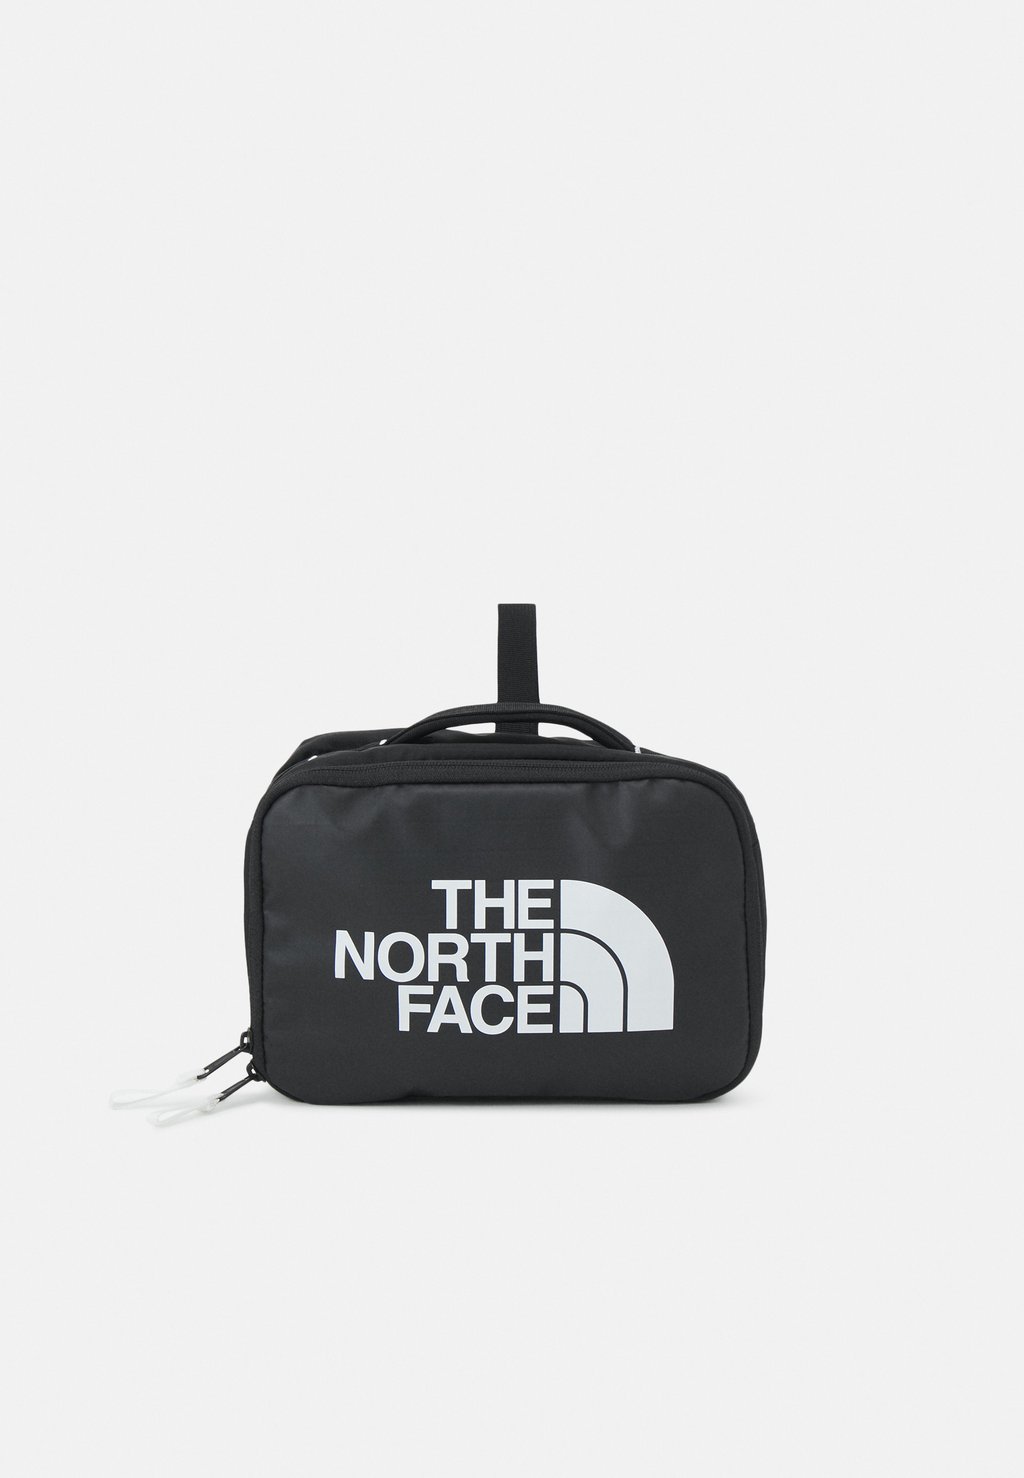 Косметичка BASE CAMP VOYAGER DOPP KIT UNISEX The North Face, черный/белый цена и фото